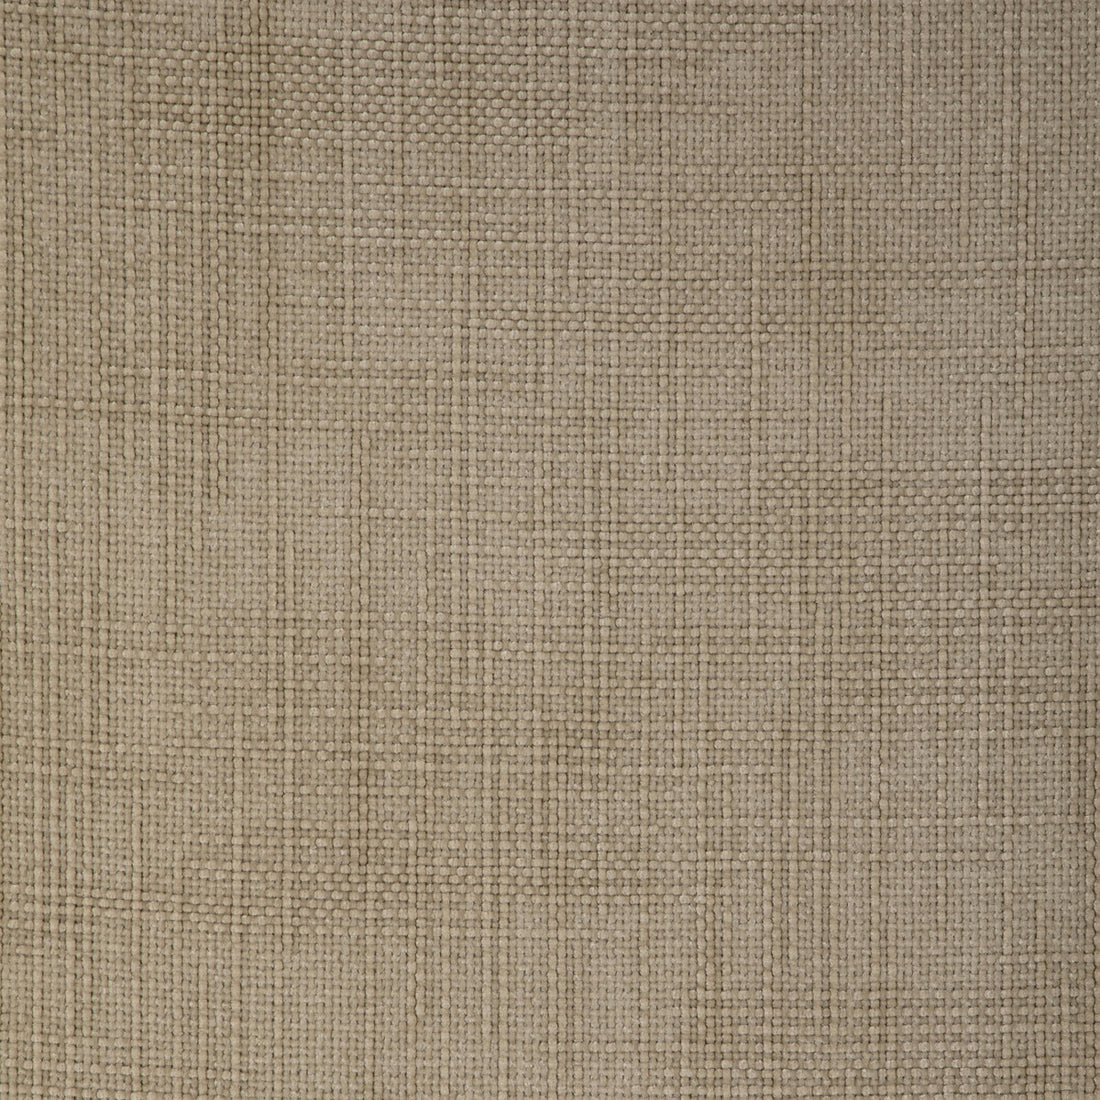 Kravet Smart fabric in 36991-116 color - pattern 36991.116.0 - by Kravet Smart in the Performance Kravetarmor collection